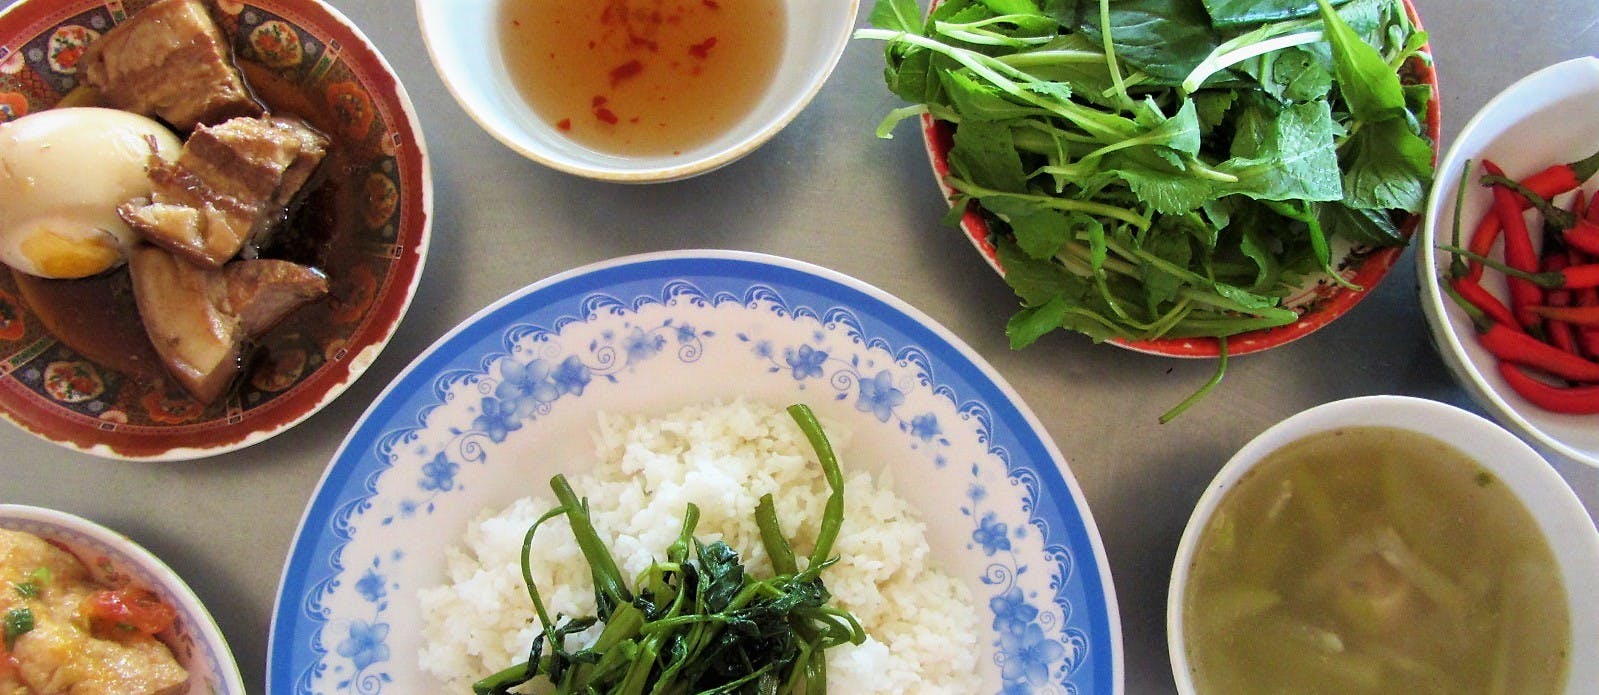 Cơm bình dân - common rice eateries in Vietnam